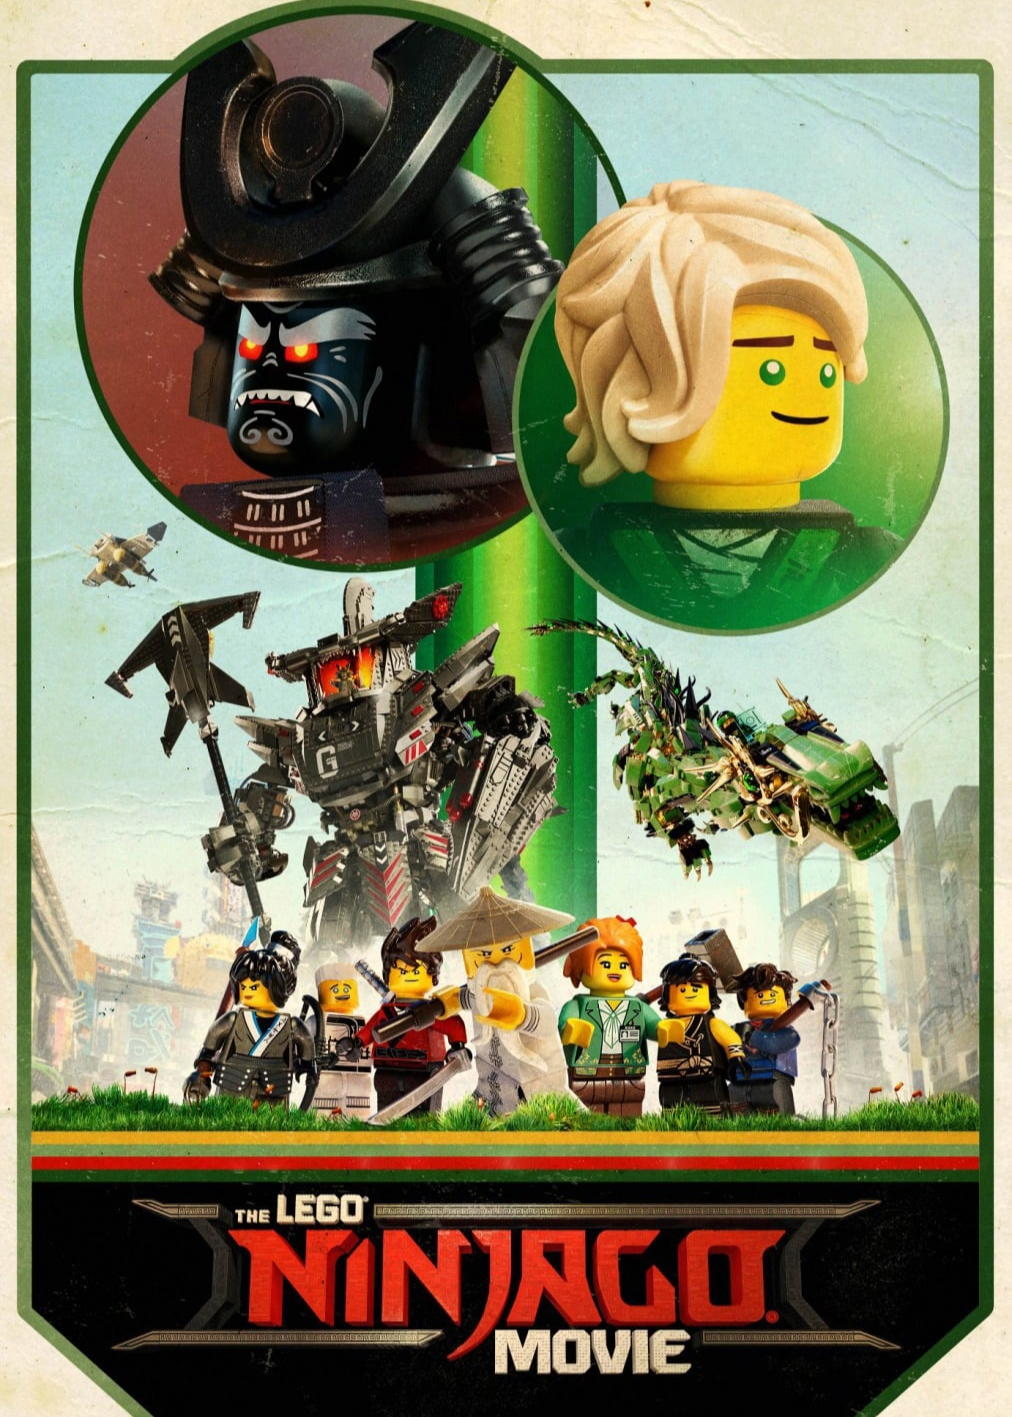 Poster Phim Phim LEGO Ninjago (The Lego Ninjago Movie)